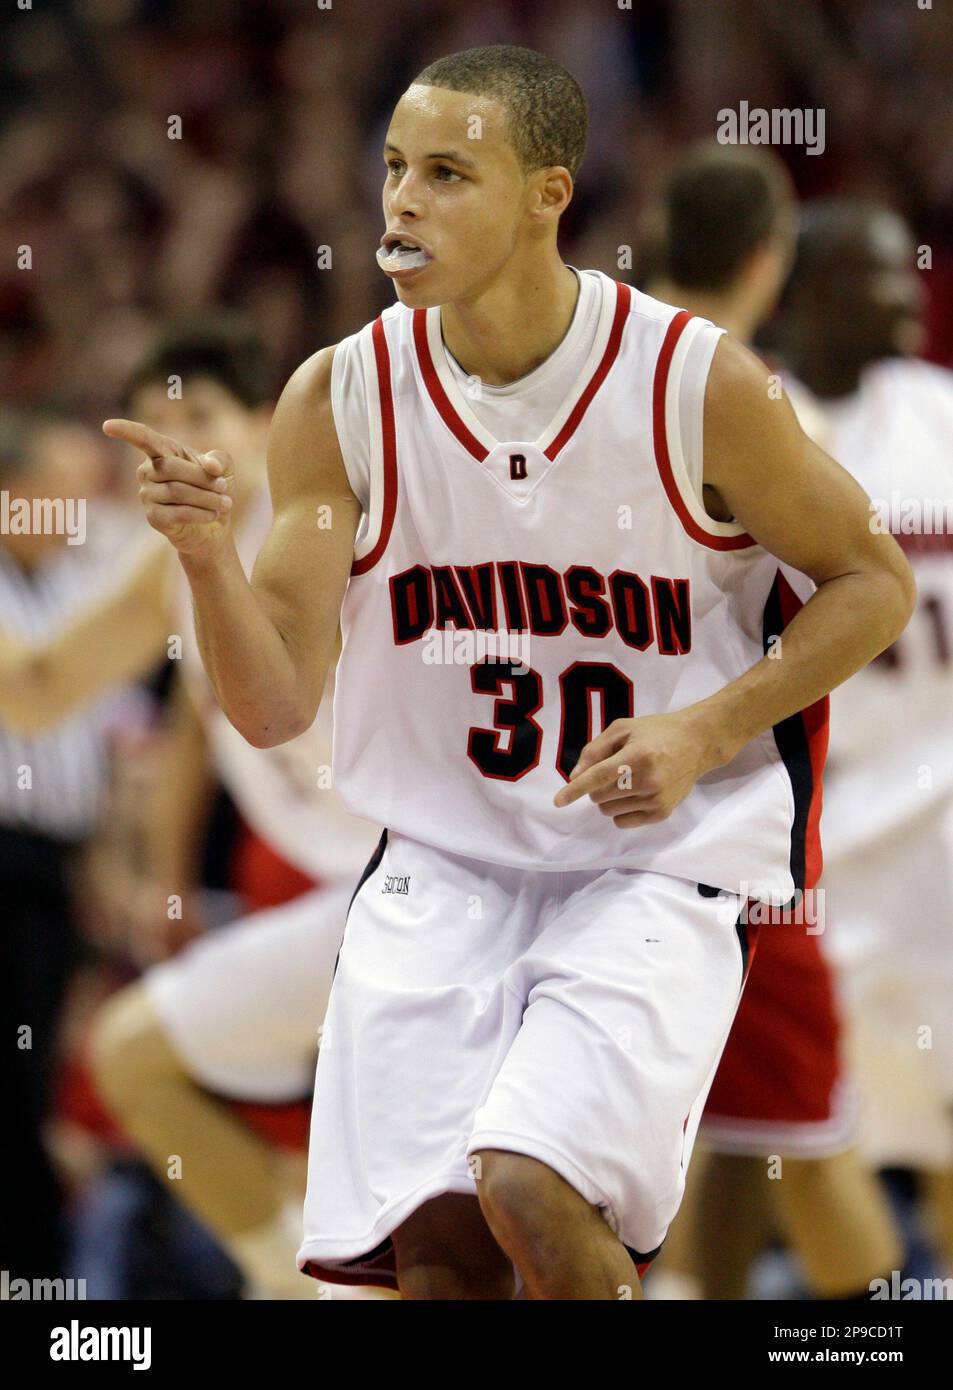 Stephen Curry - Men's Basketball - Davidson College Athletics